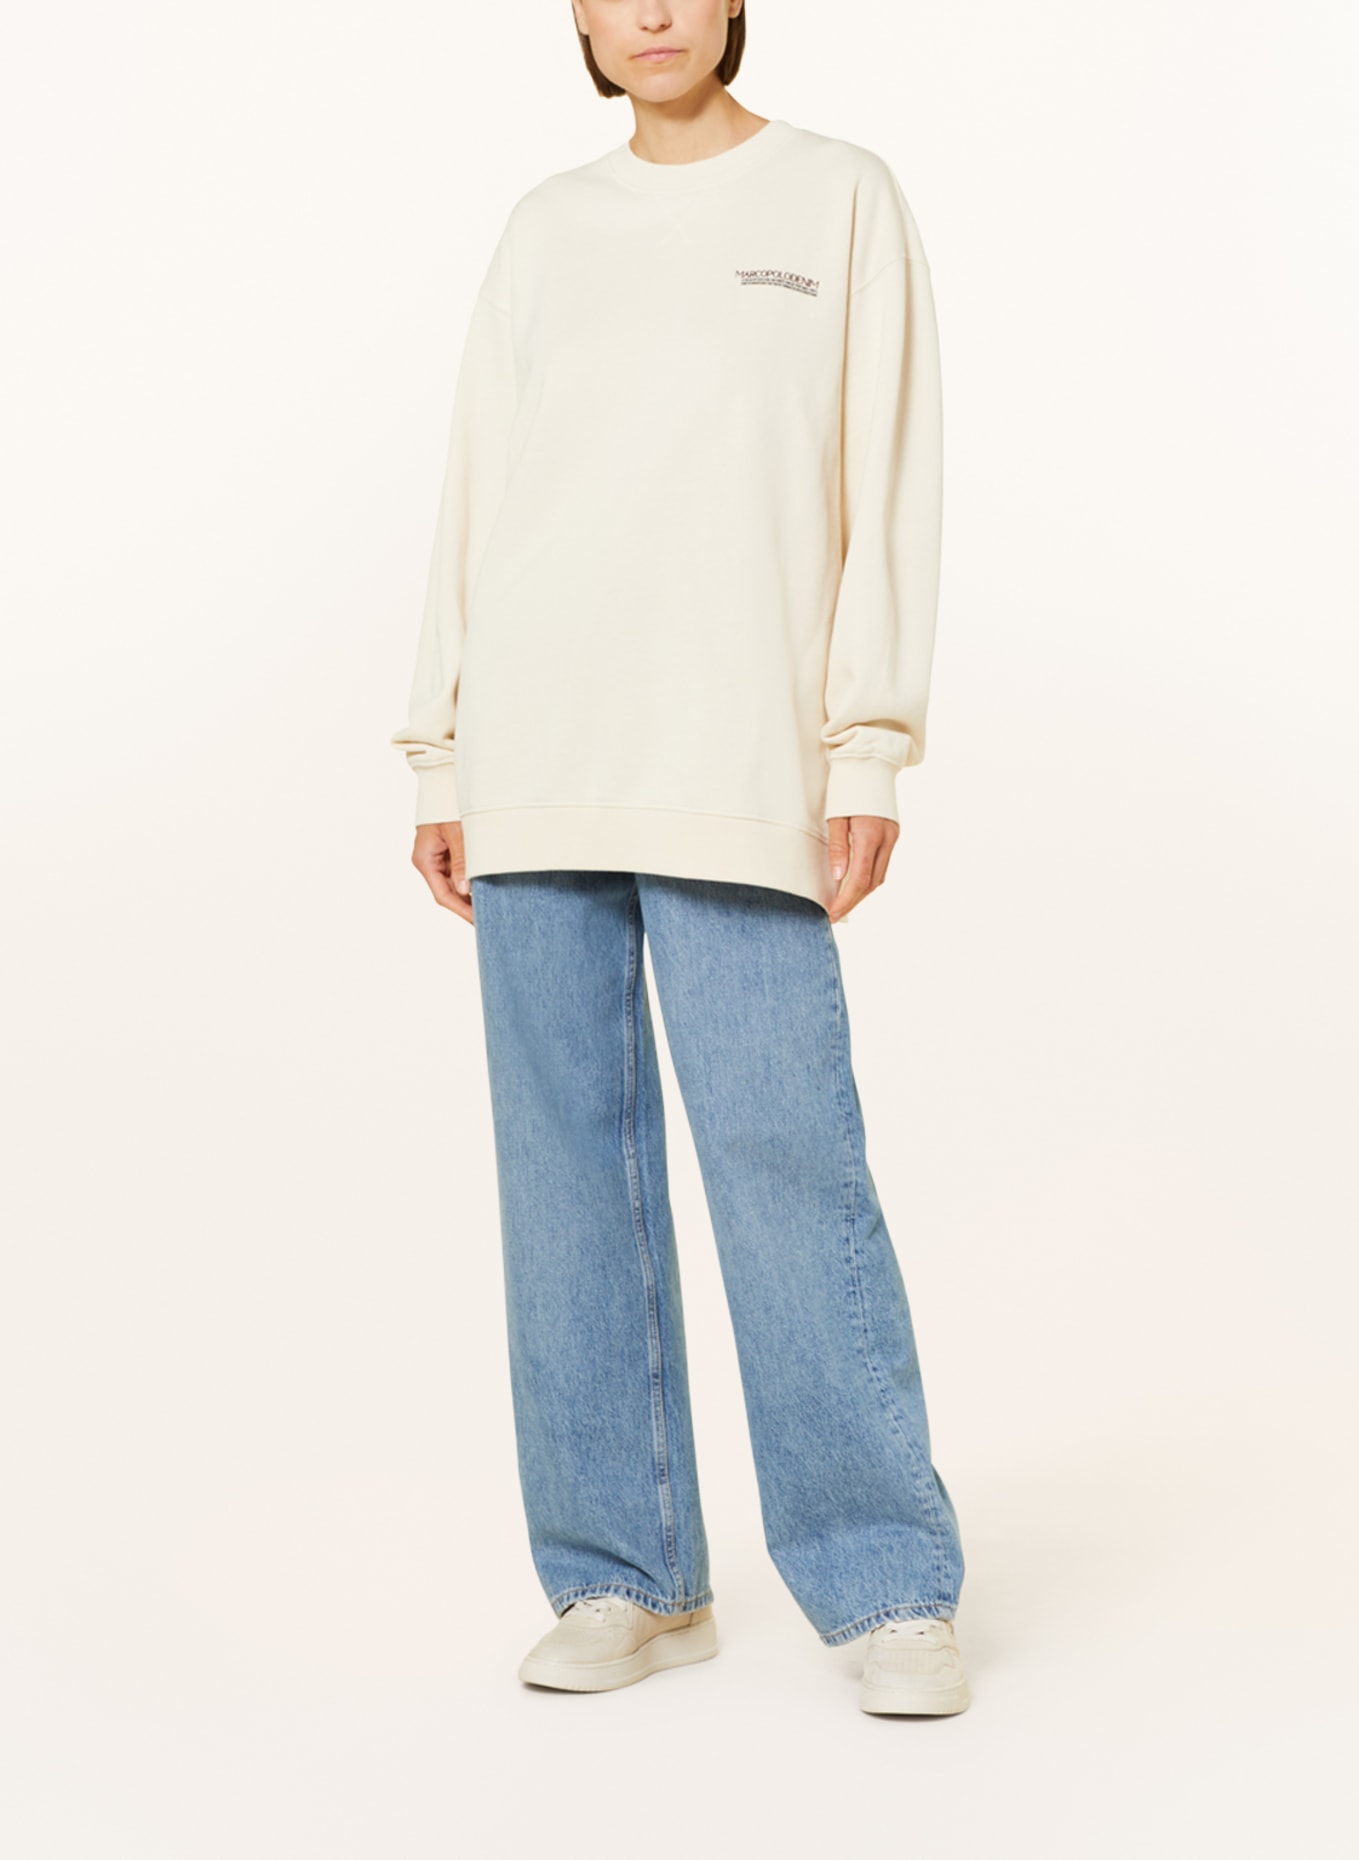 Marc O'Polo DENIM Oversized-Sweatshirt, Farbe: 121 white blush (Bild 3)